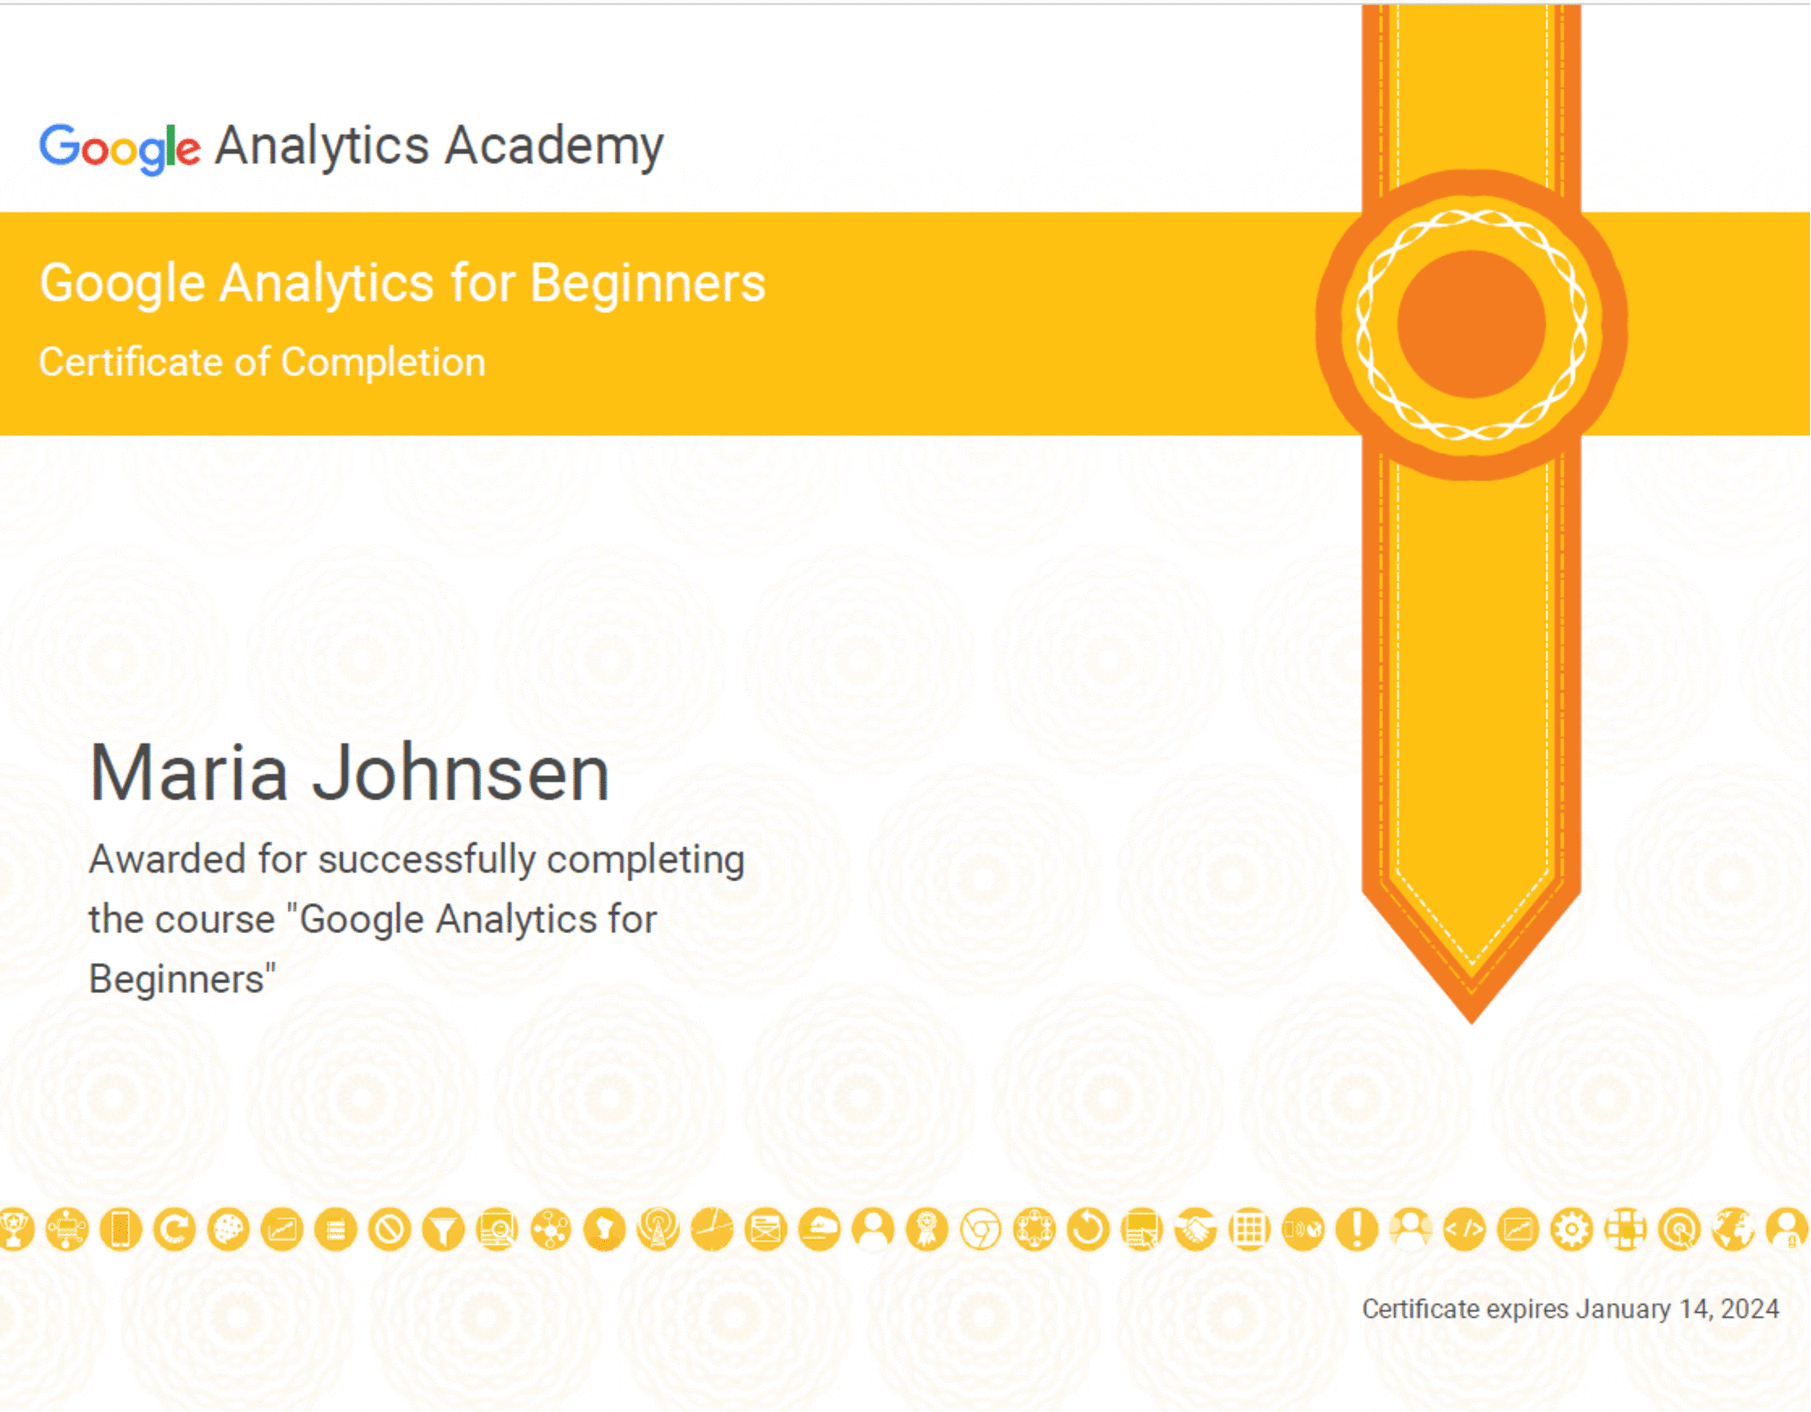 Maria Johnsens' Google Analytics Certificates